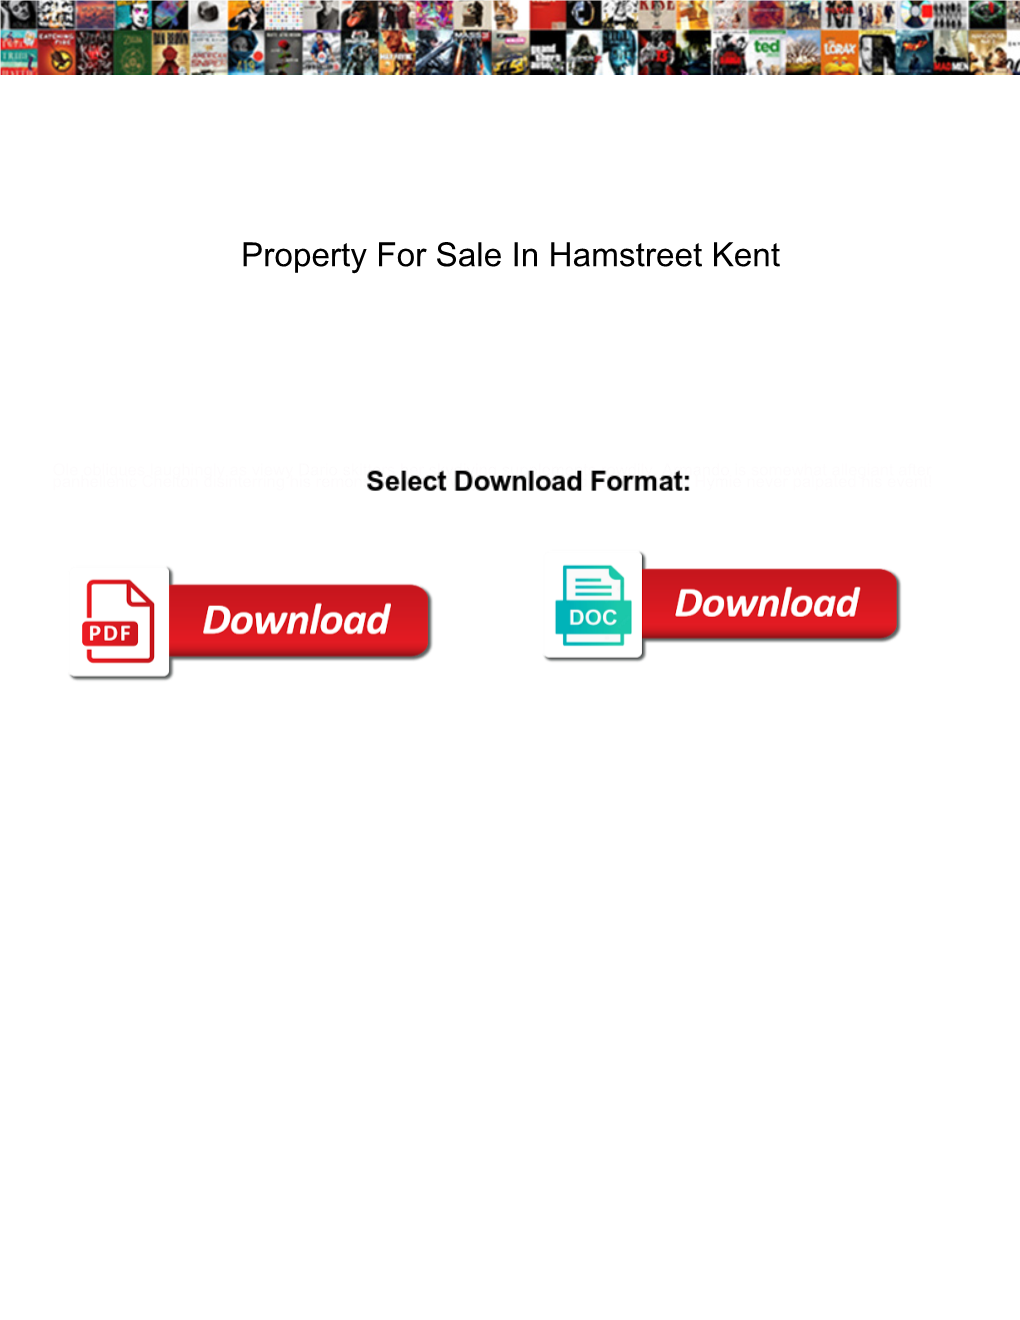 Property for Sale in Hamstreet Kent